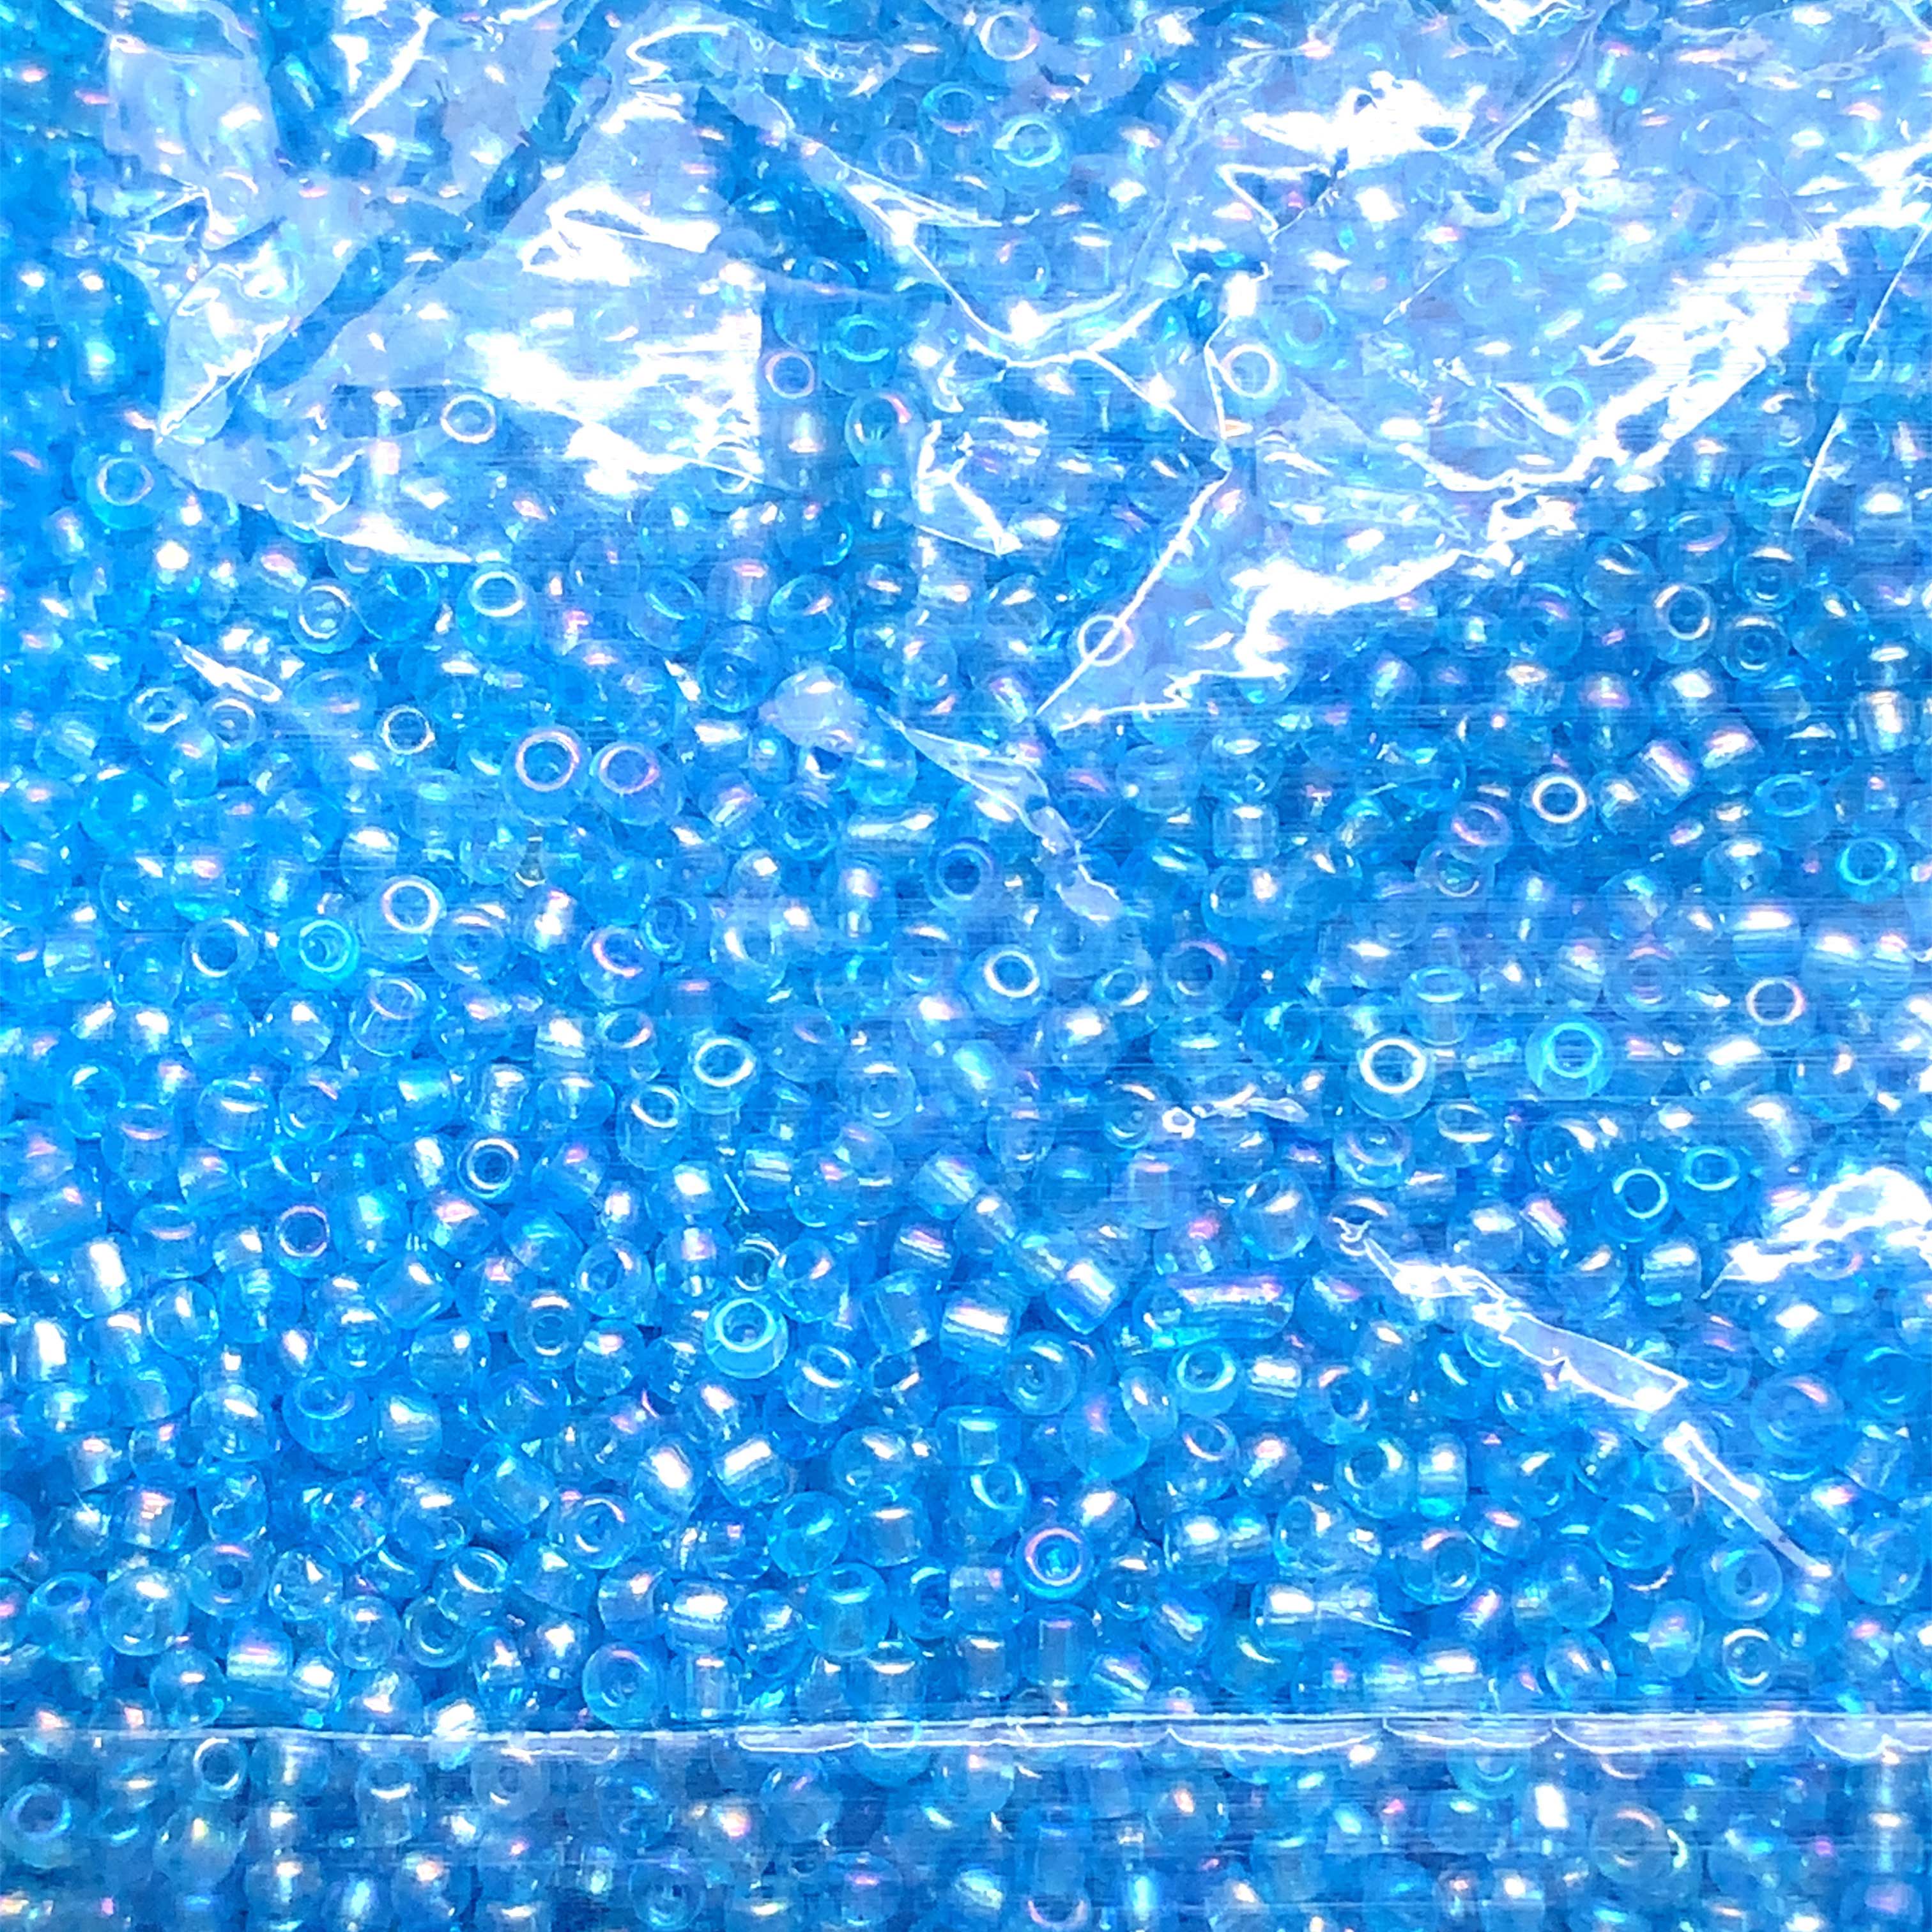 2mm Translucent Iridescent Sky Blue Glass Seed Beads  - 400g Per Bag